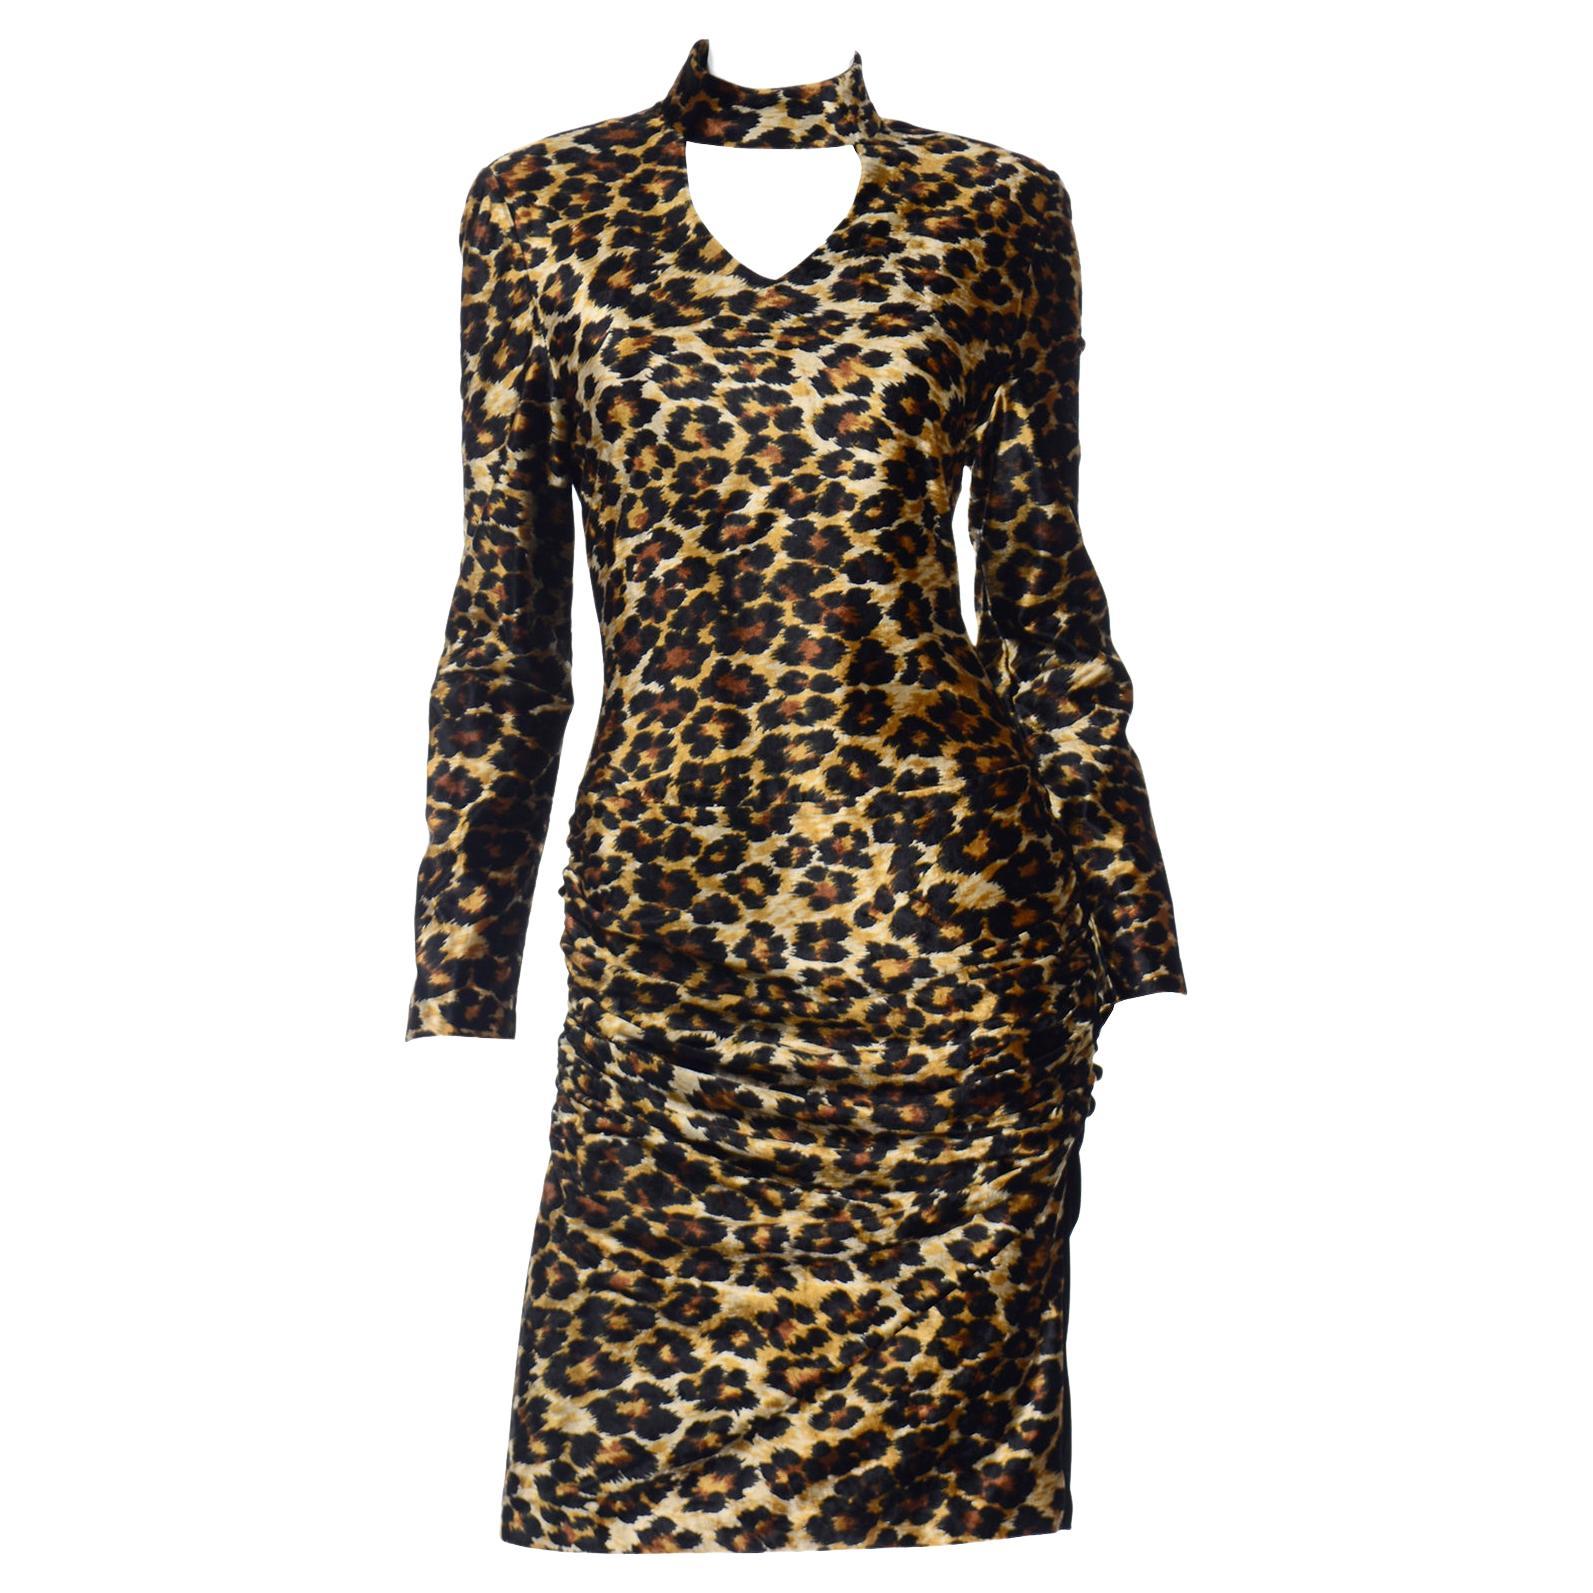 1989 Patrick Kelly Vintage Leopard Print Bodycon Dress